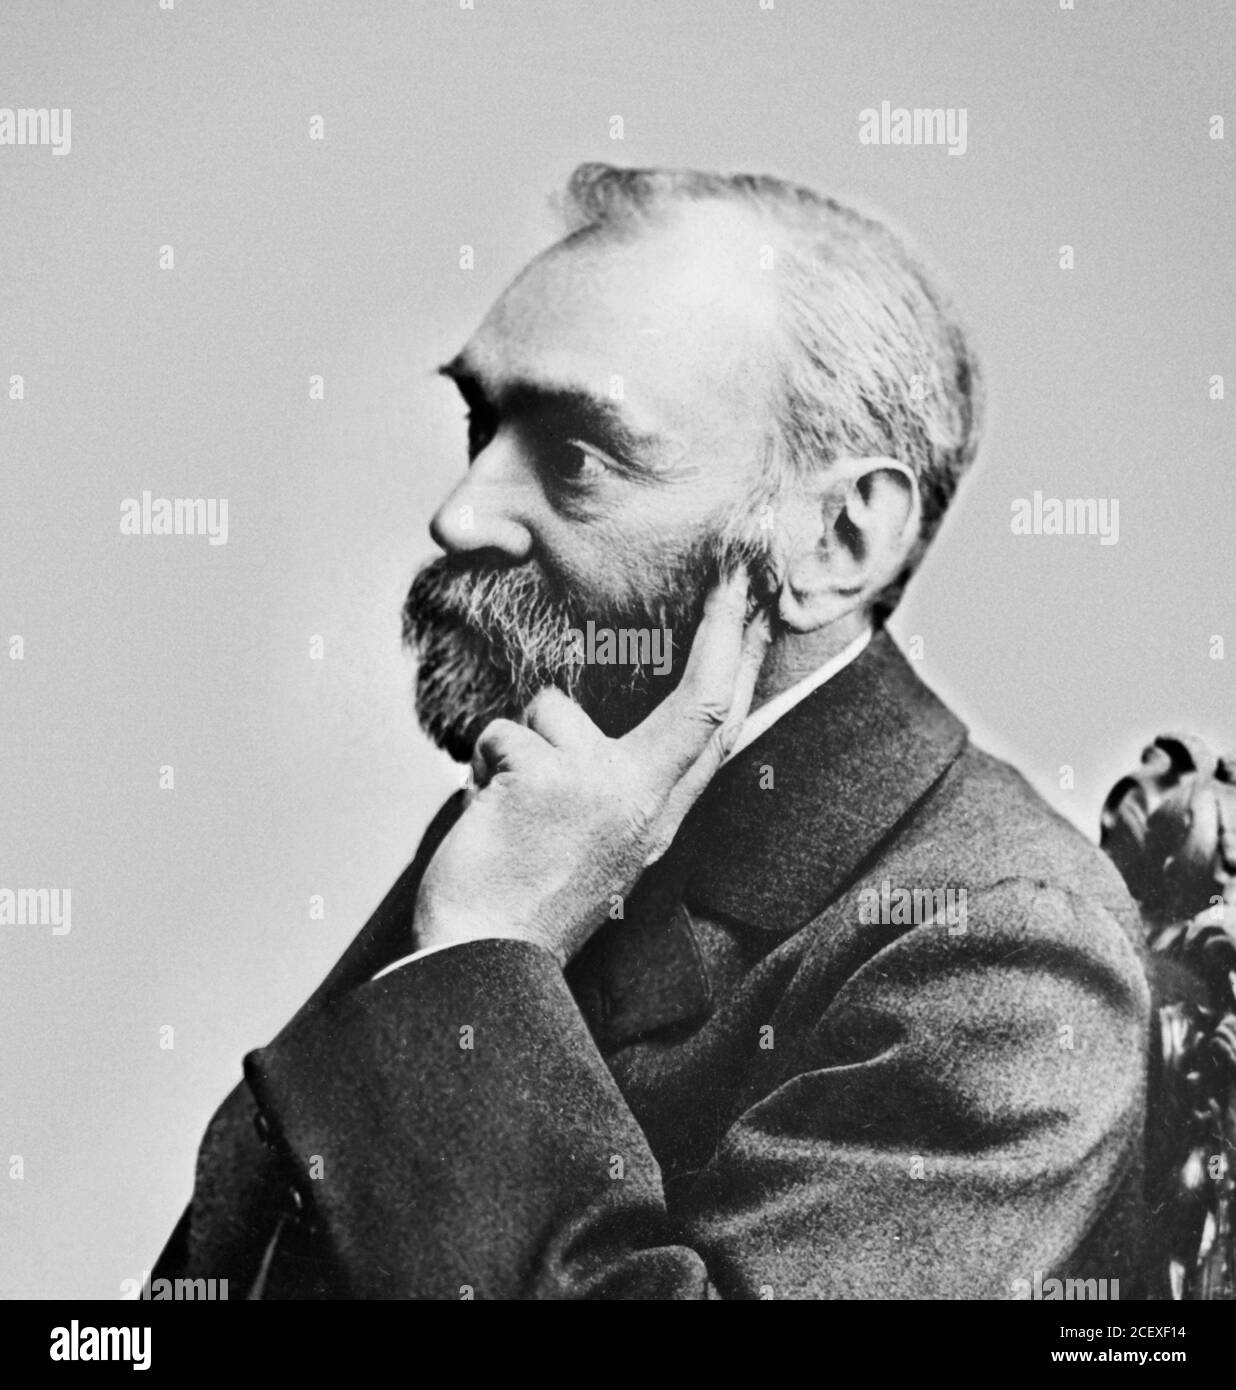 Alfred Nobel, portrait by Gösta Florman, date unknown. Stock Photo